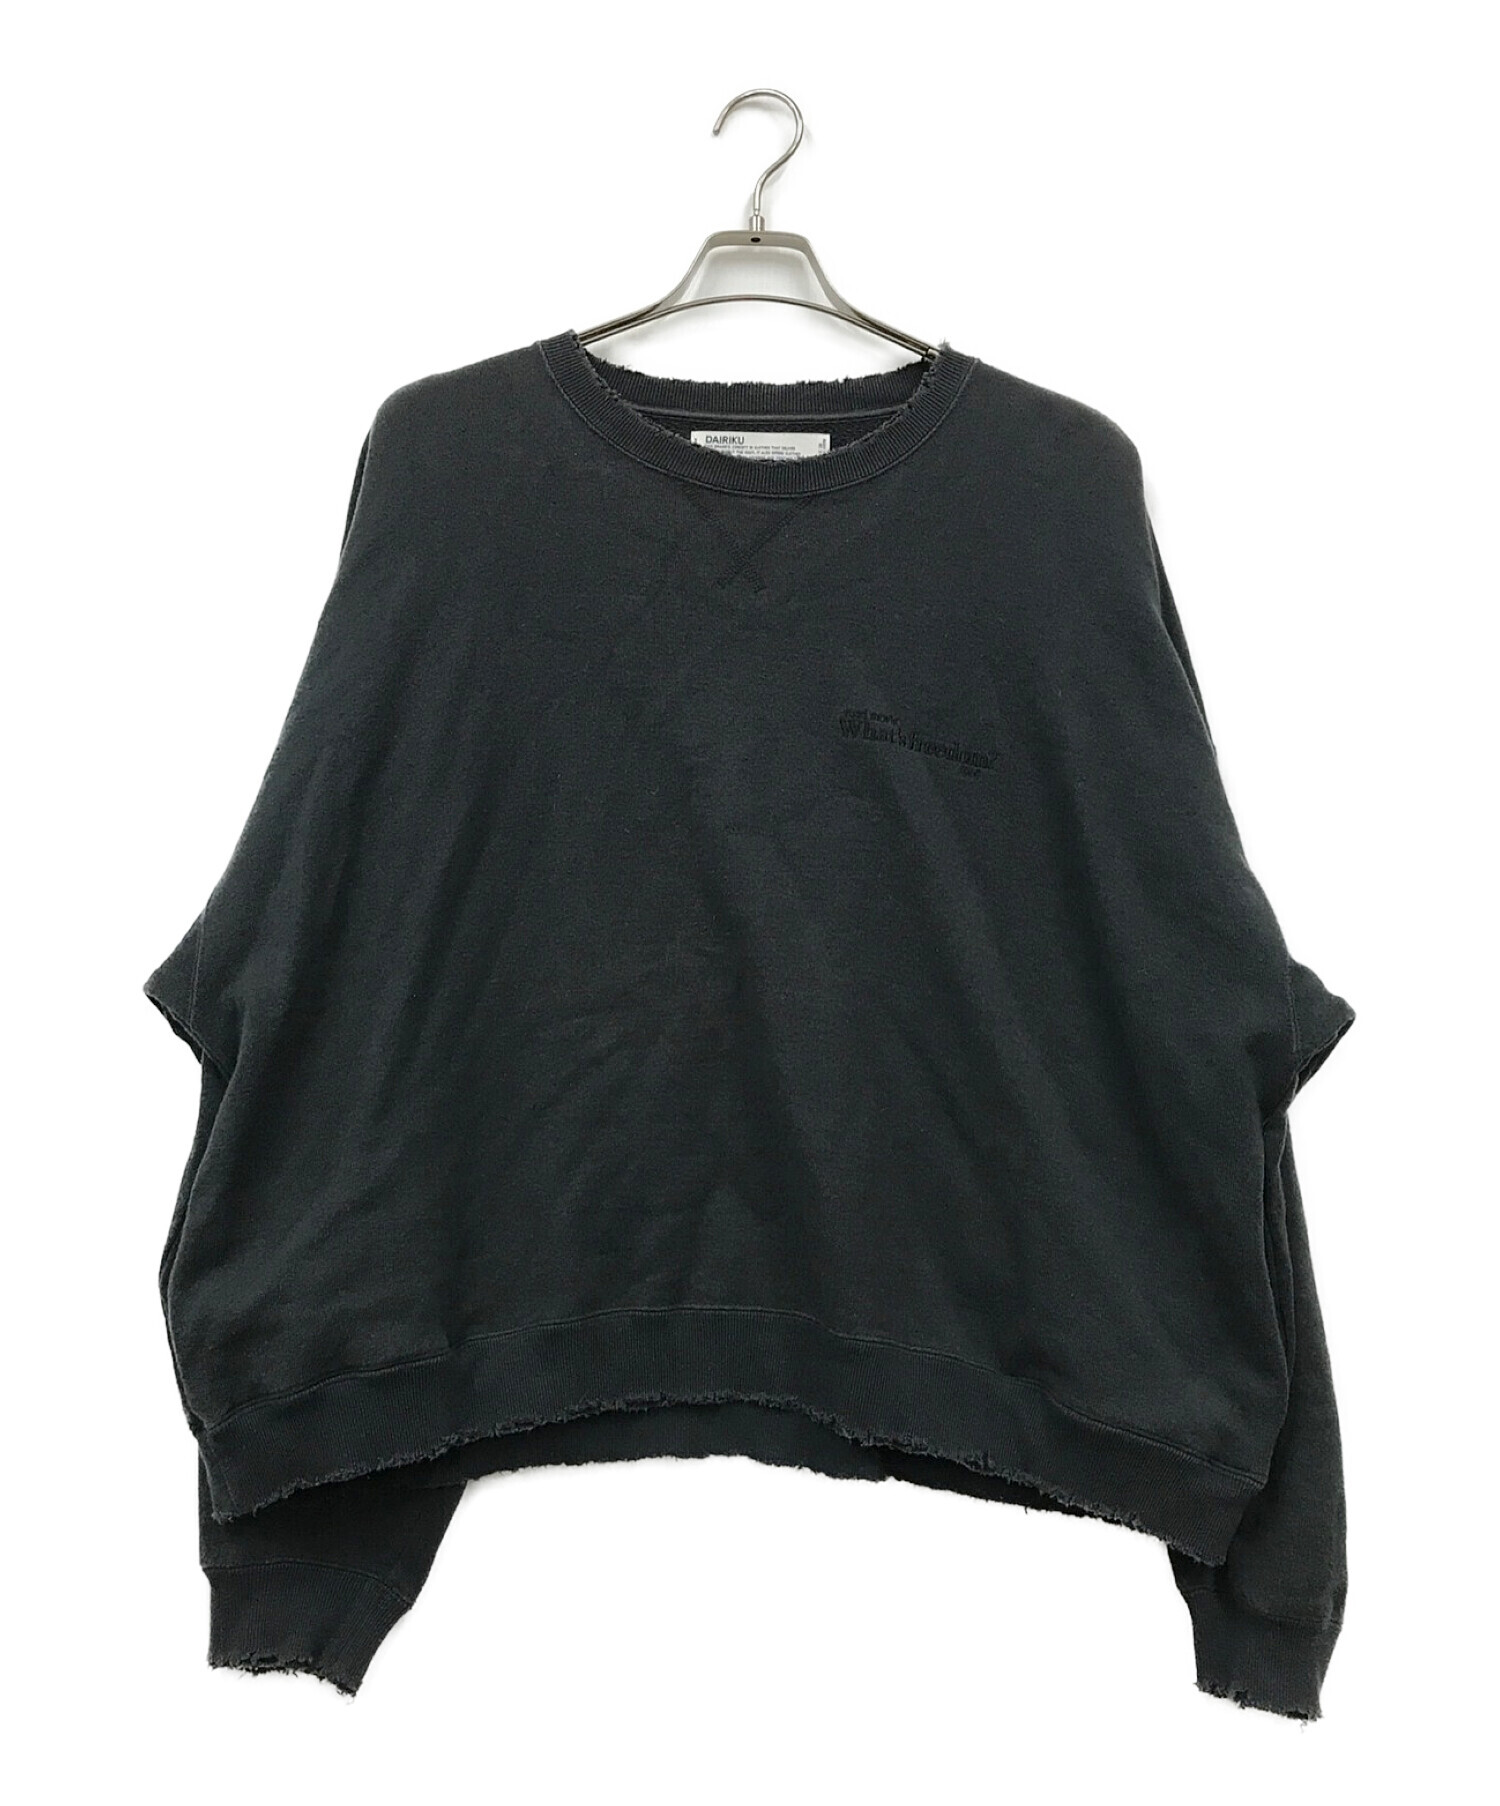 DAIRIKU (ダイリク) Water-Repellent Pullover Sweater グレー サイズ:M